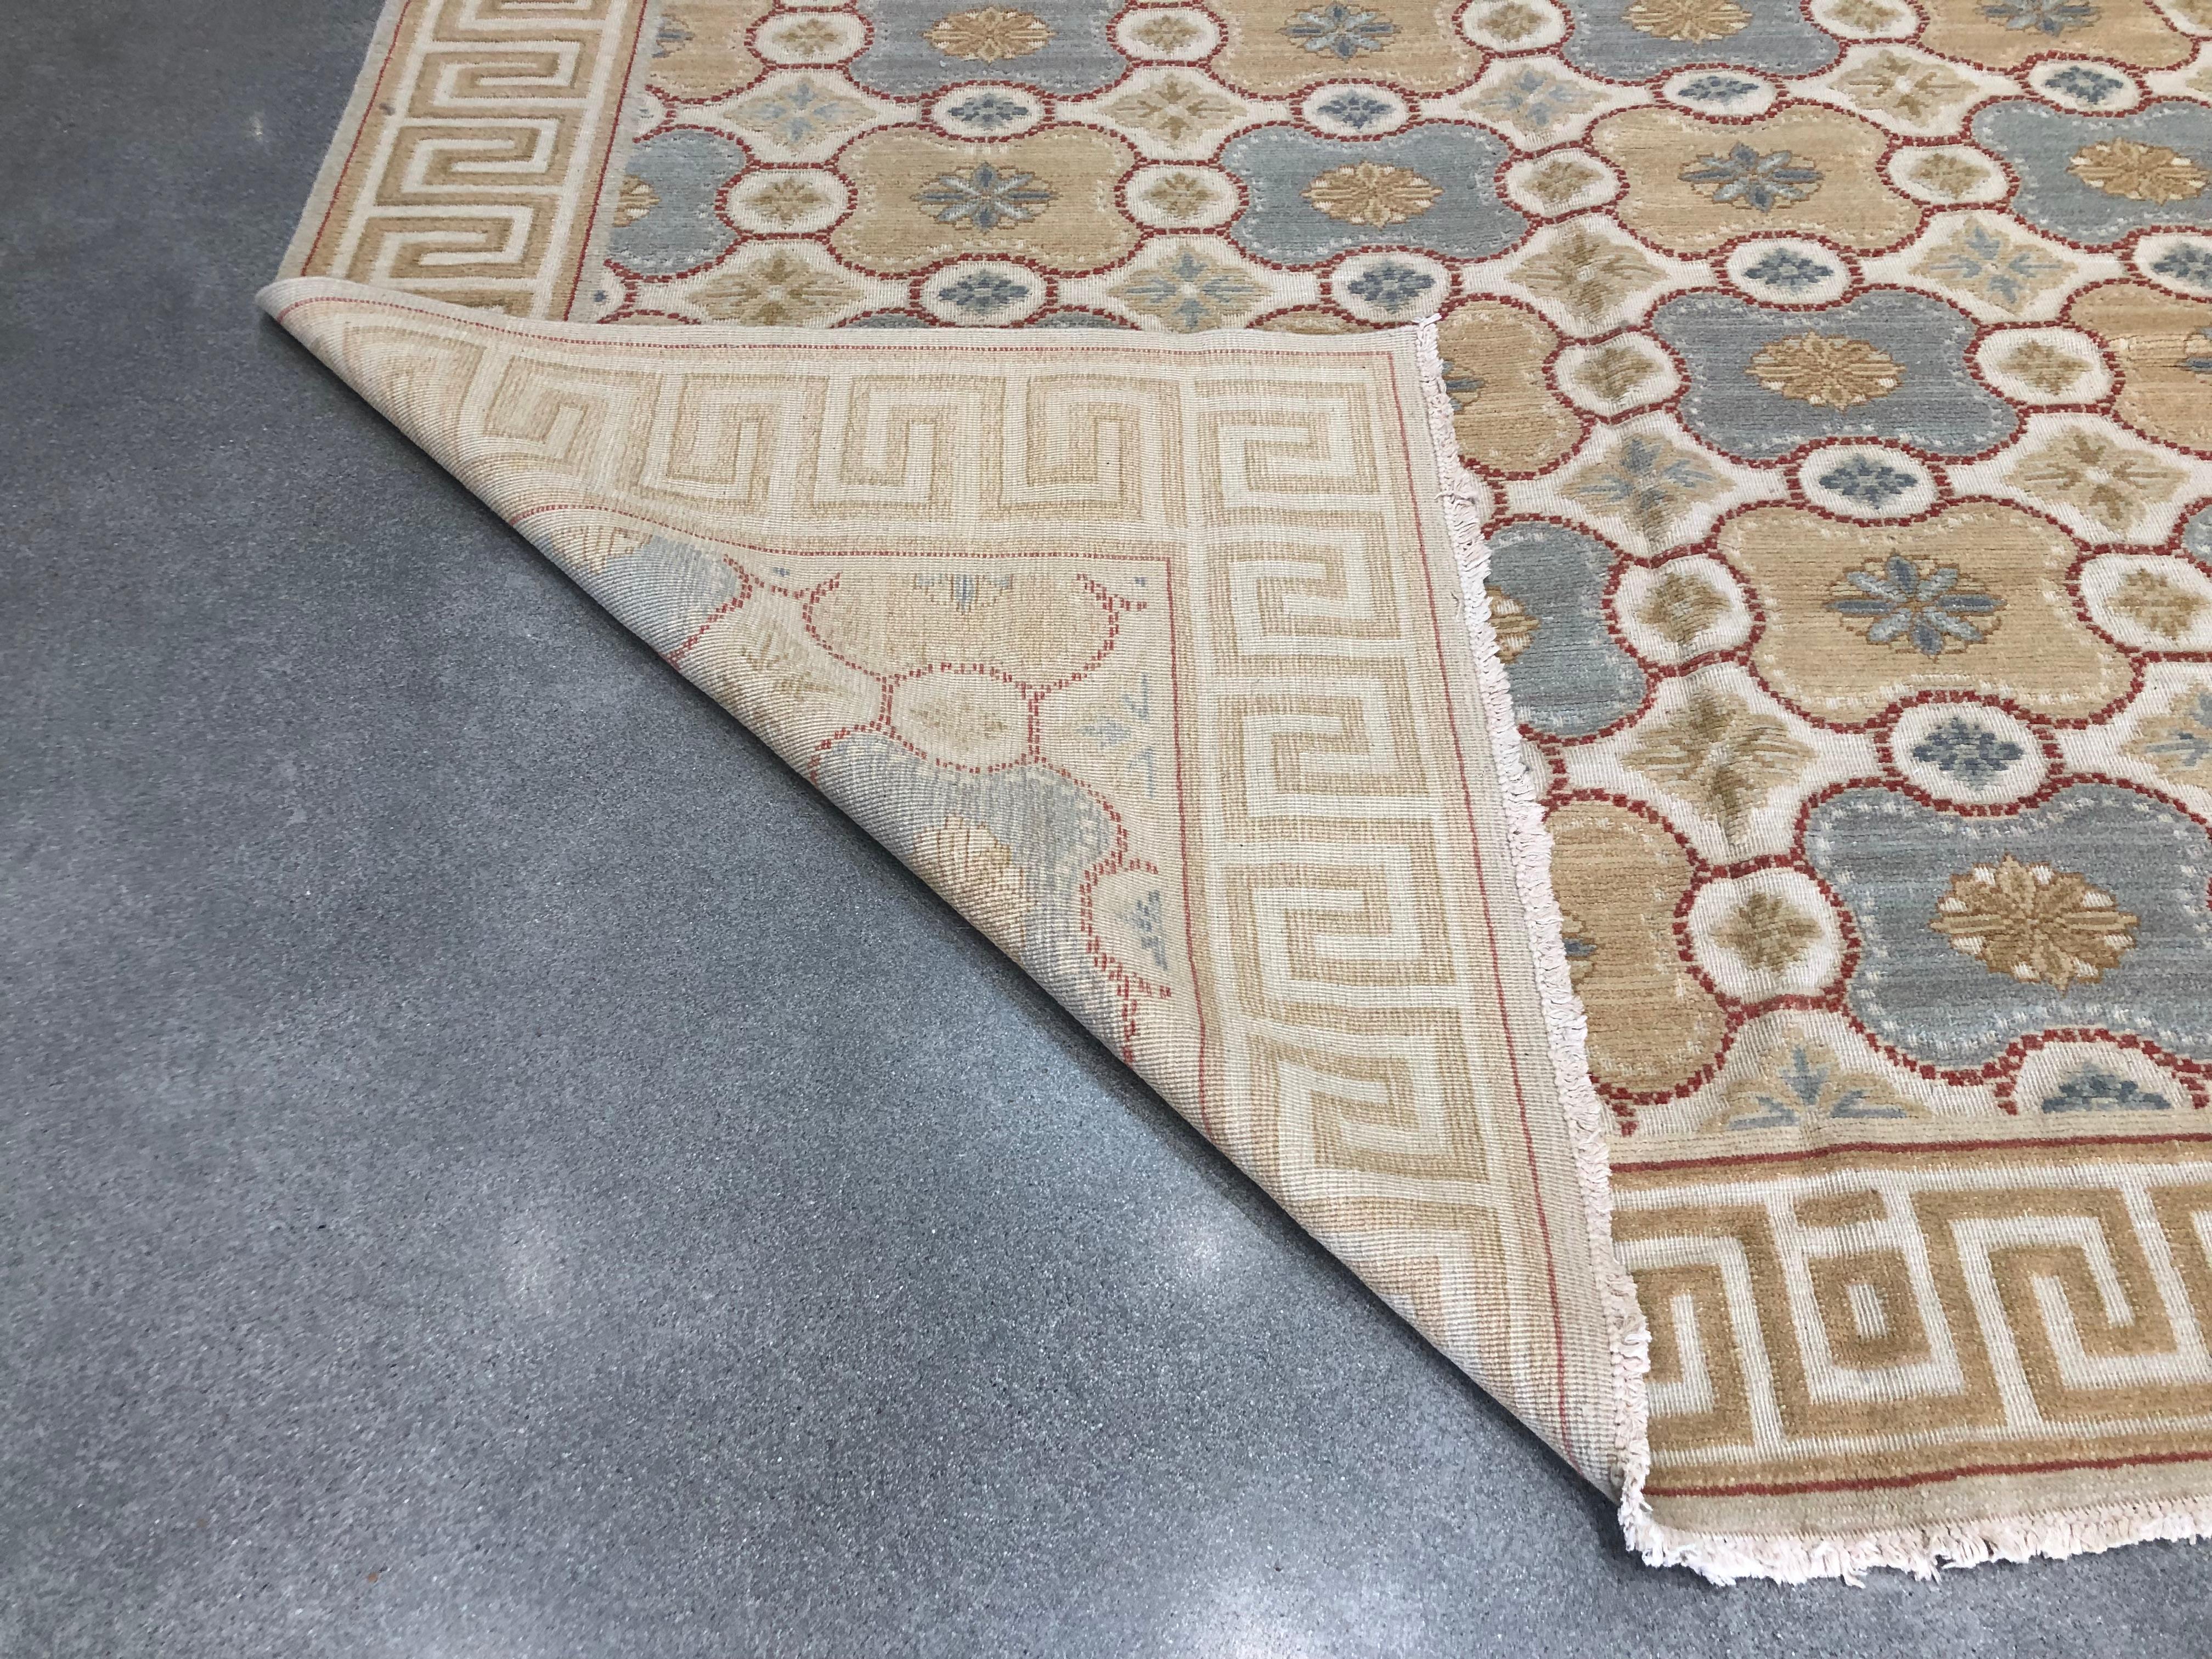 European design rug
Colors: Tan, cream, beige, brown, rust and green.